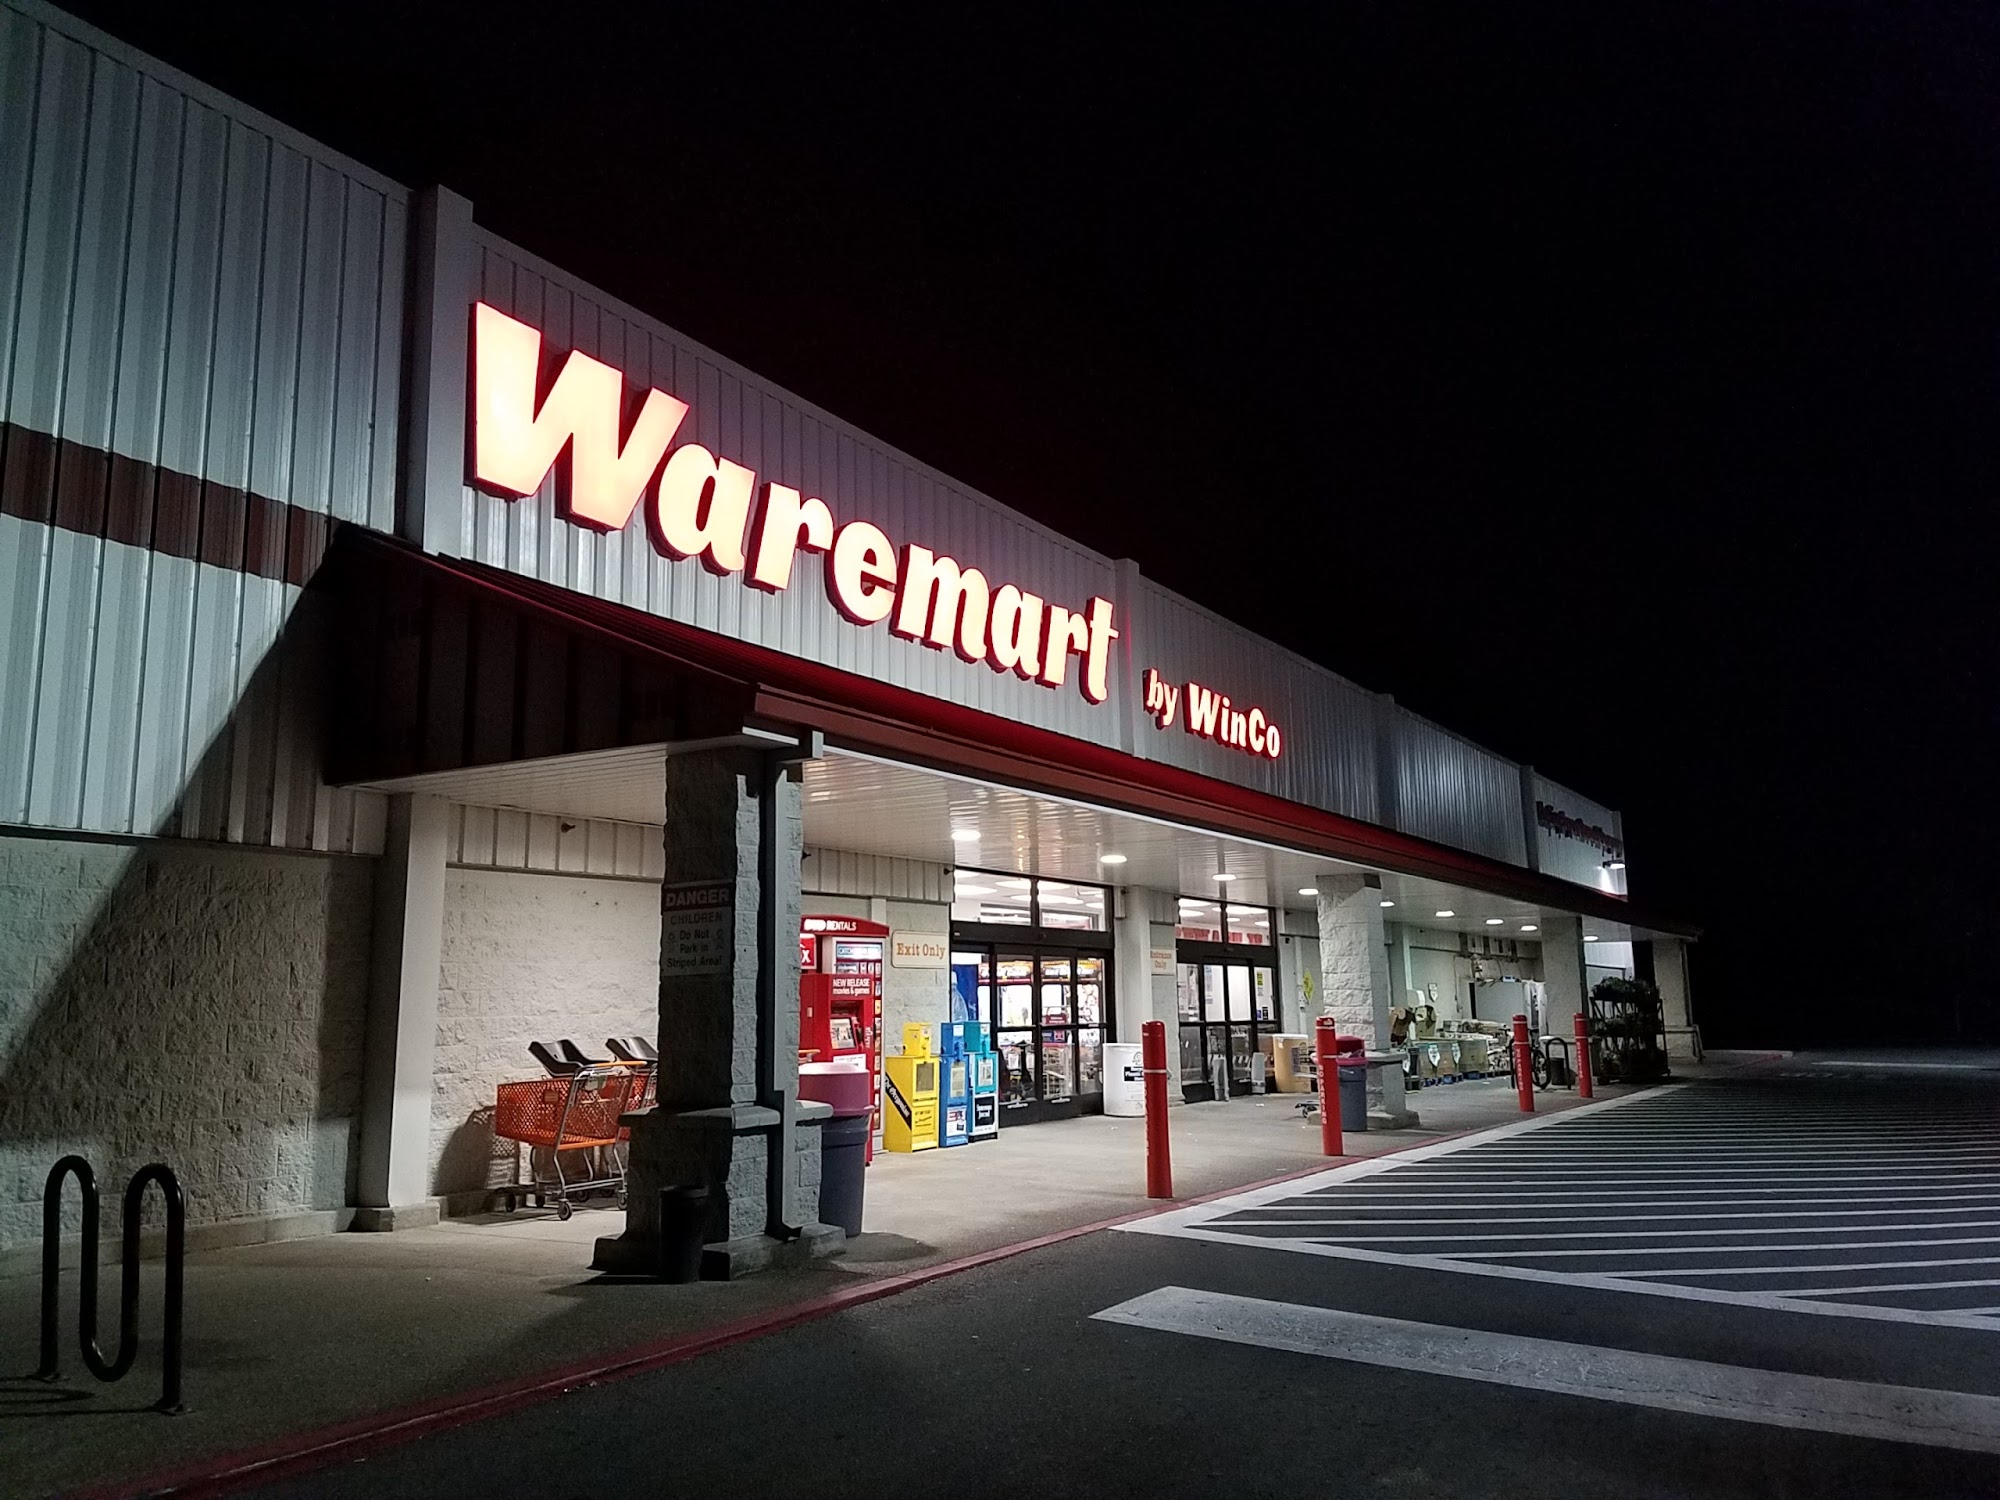 Waremart